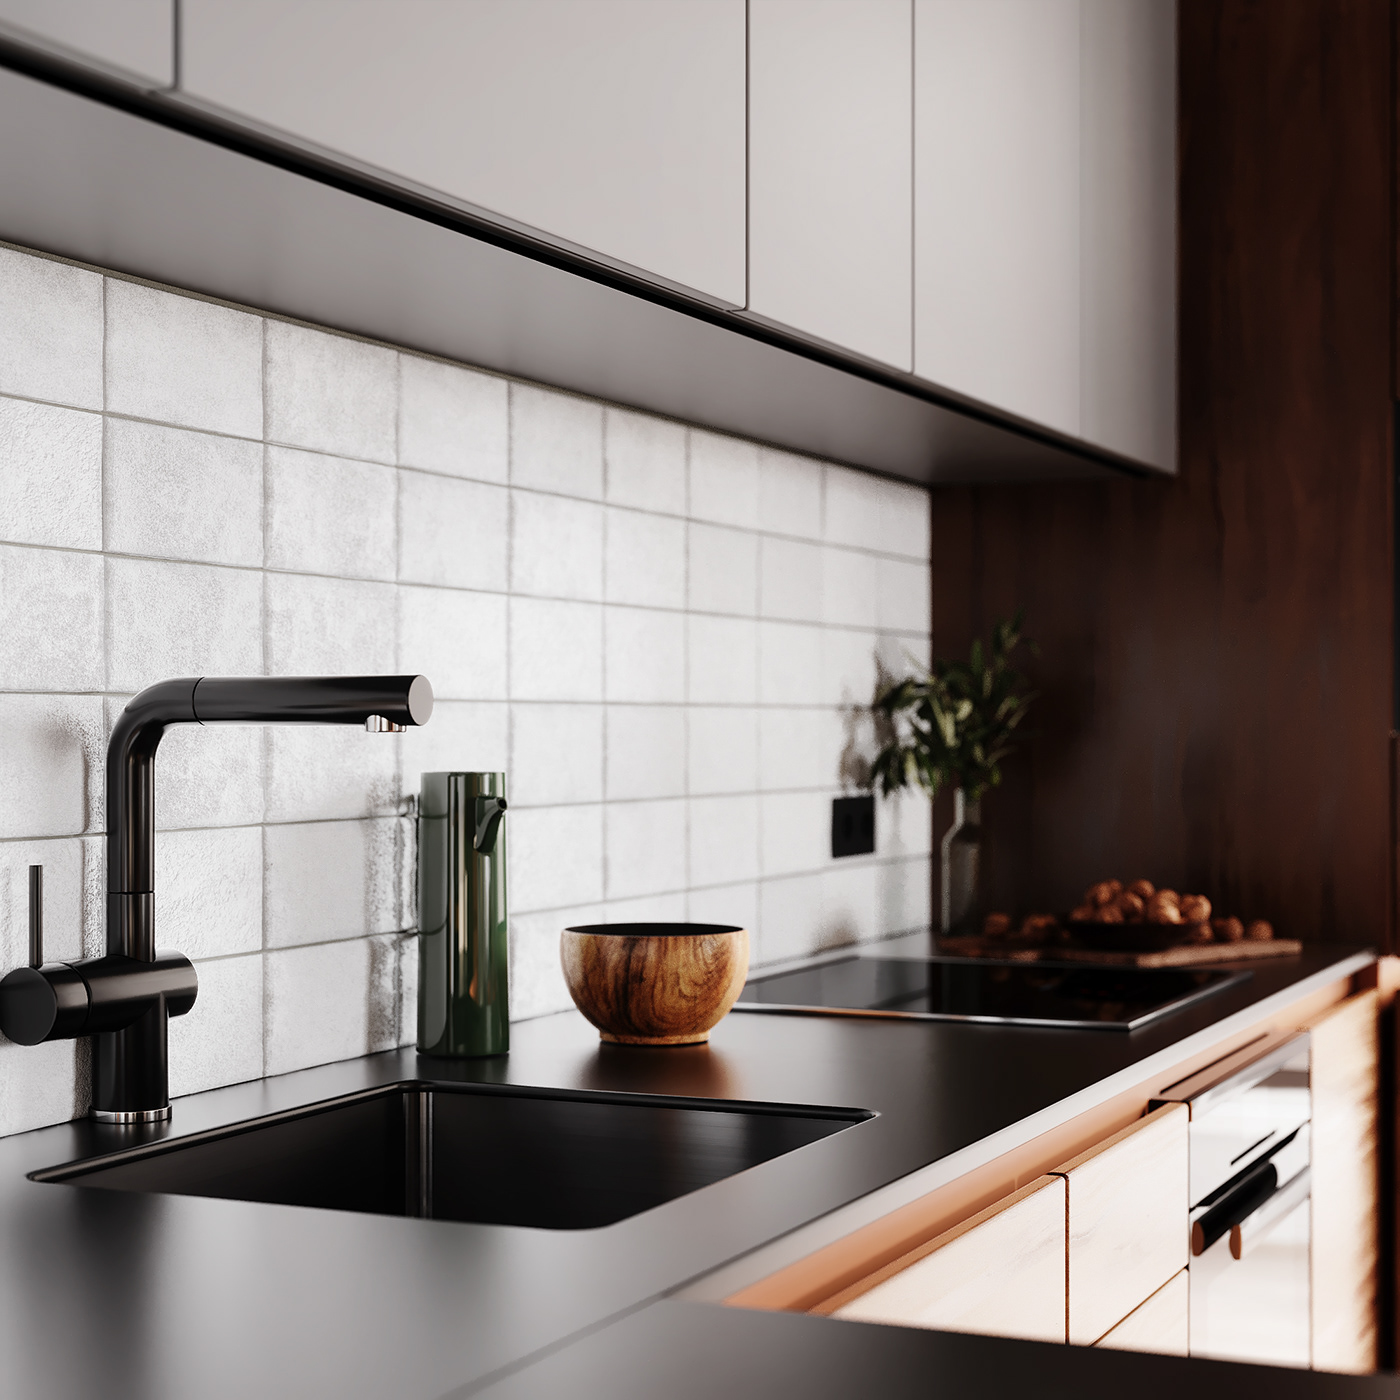 3dmax corona design Interior kitchen-living Vizualization визуализация